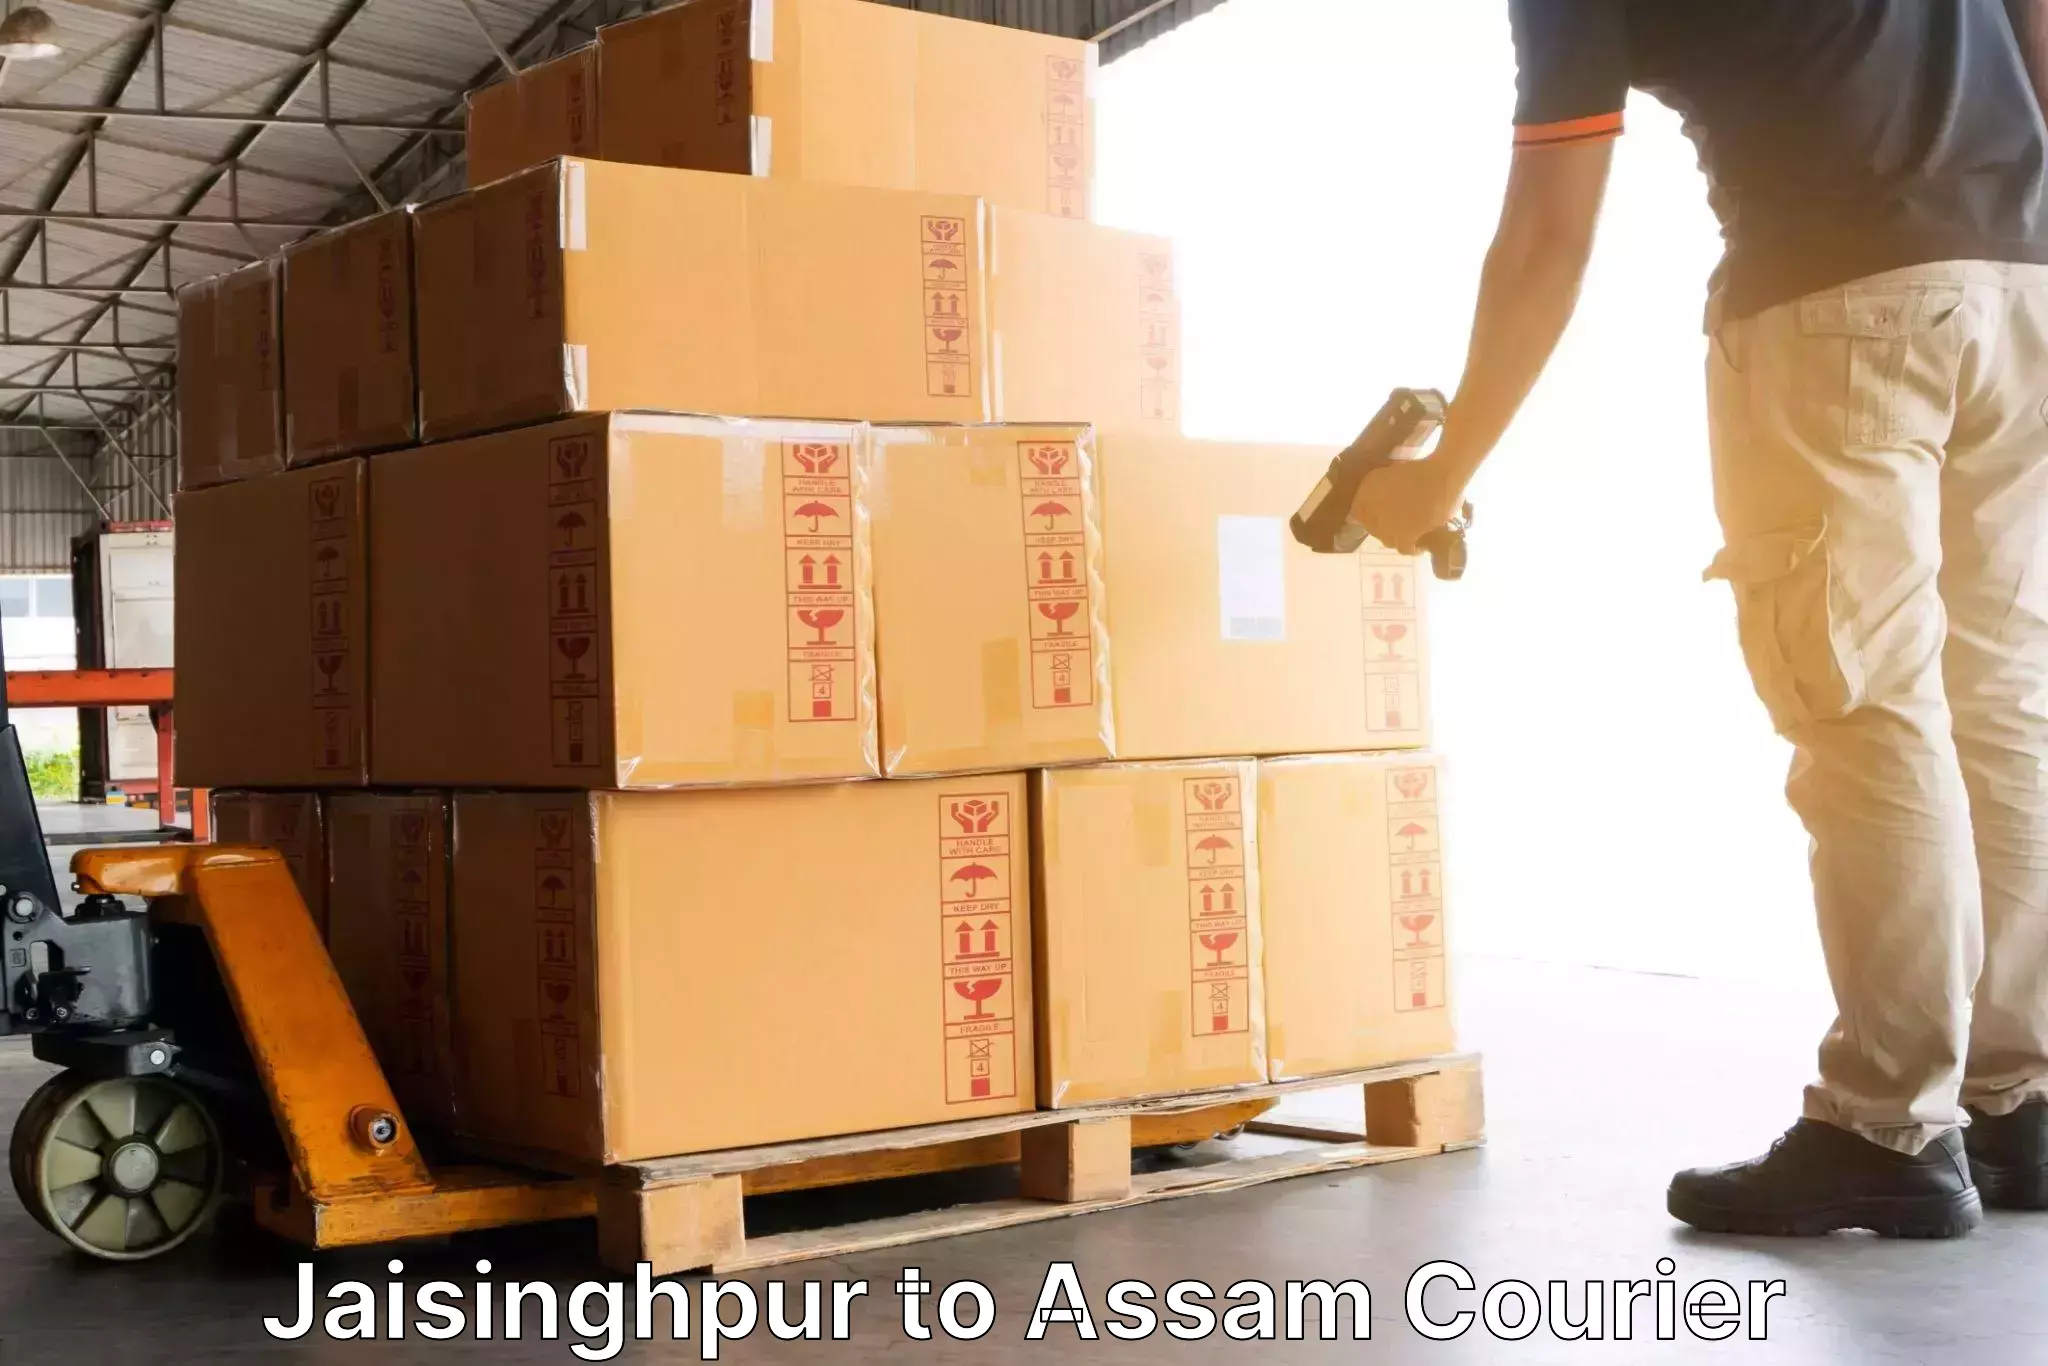 Courier service booking Jaisinghpur to Assam